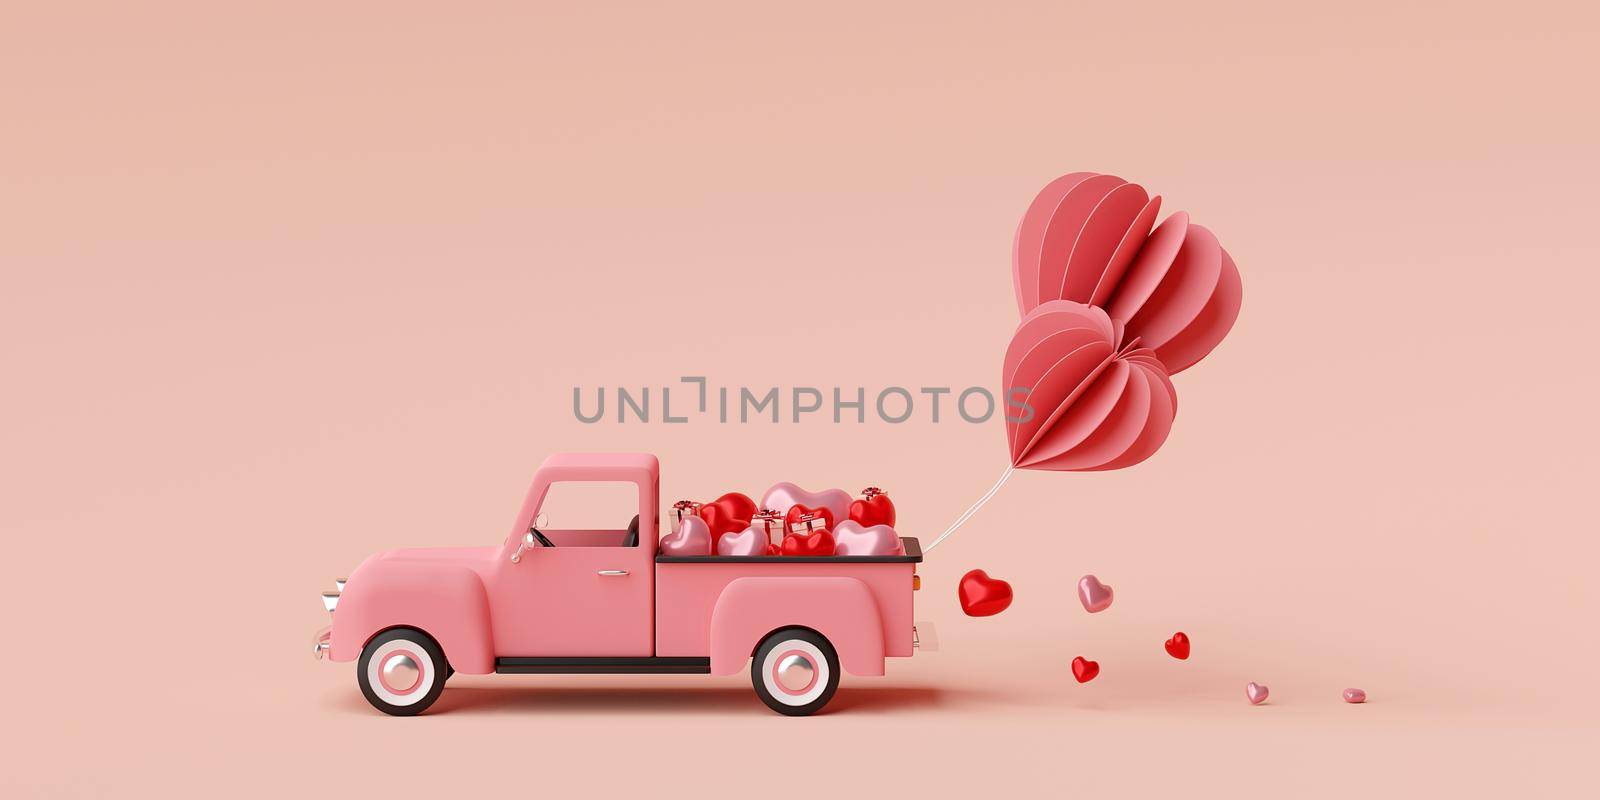 Valentine banner background of truck full of heart shape balloon with gift box, 3d rendering by nutzchotwarut